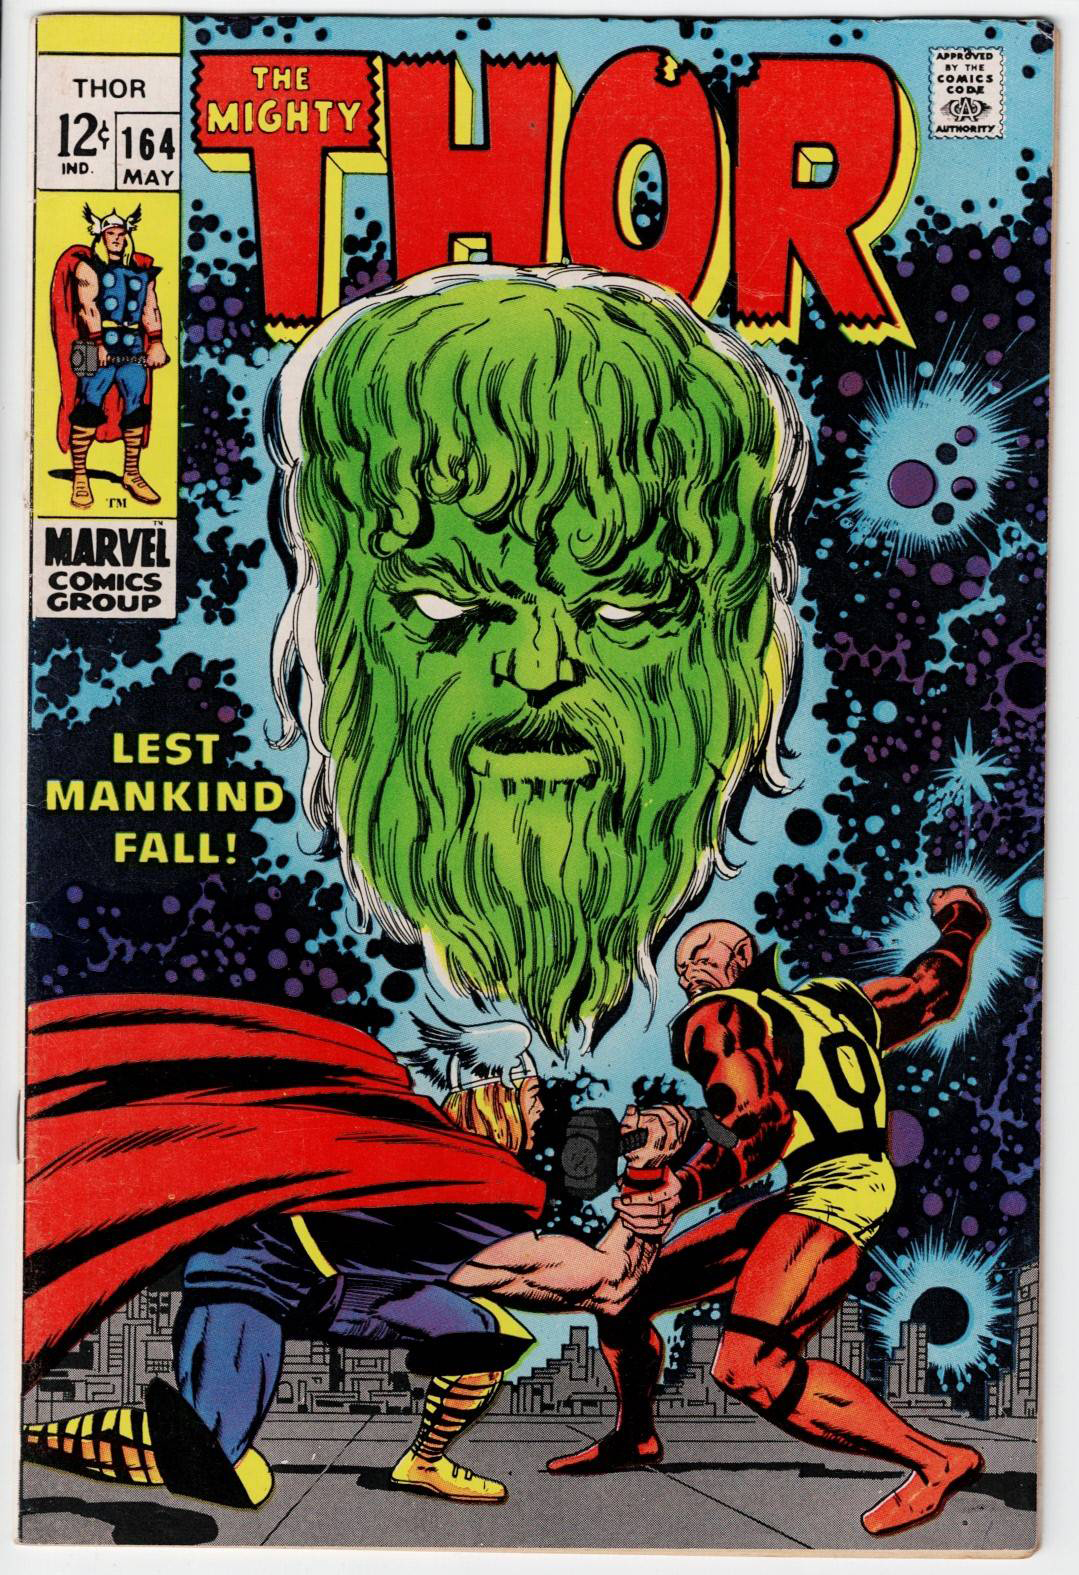 Thor #164